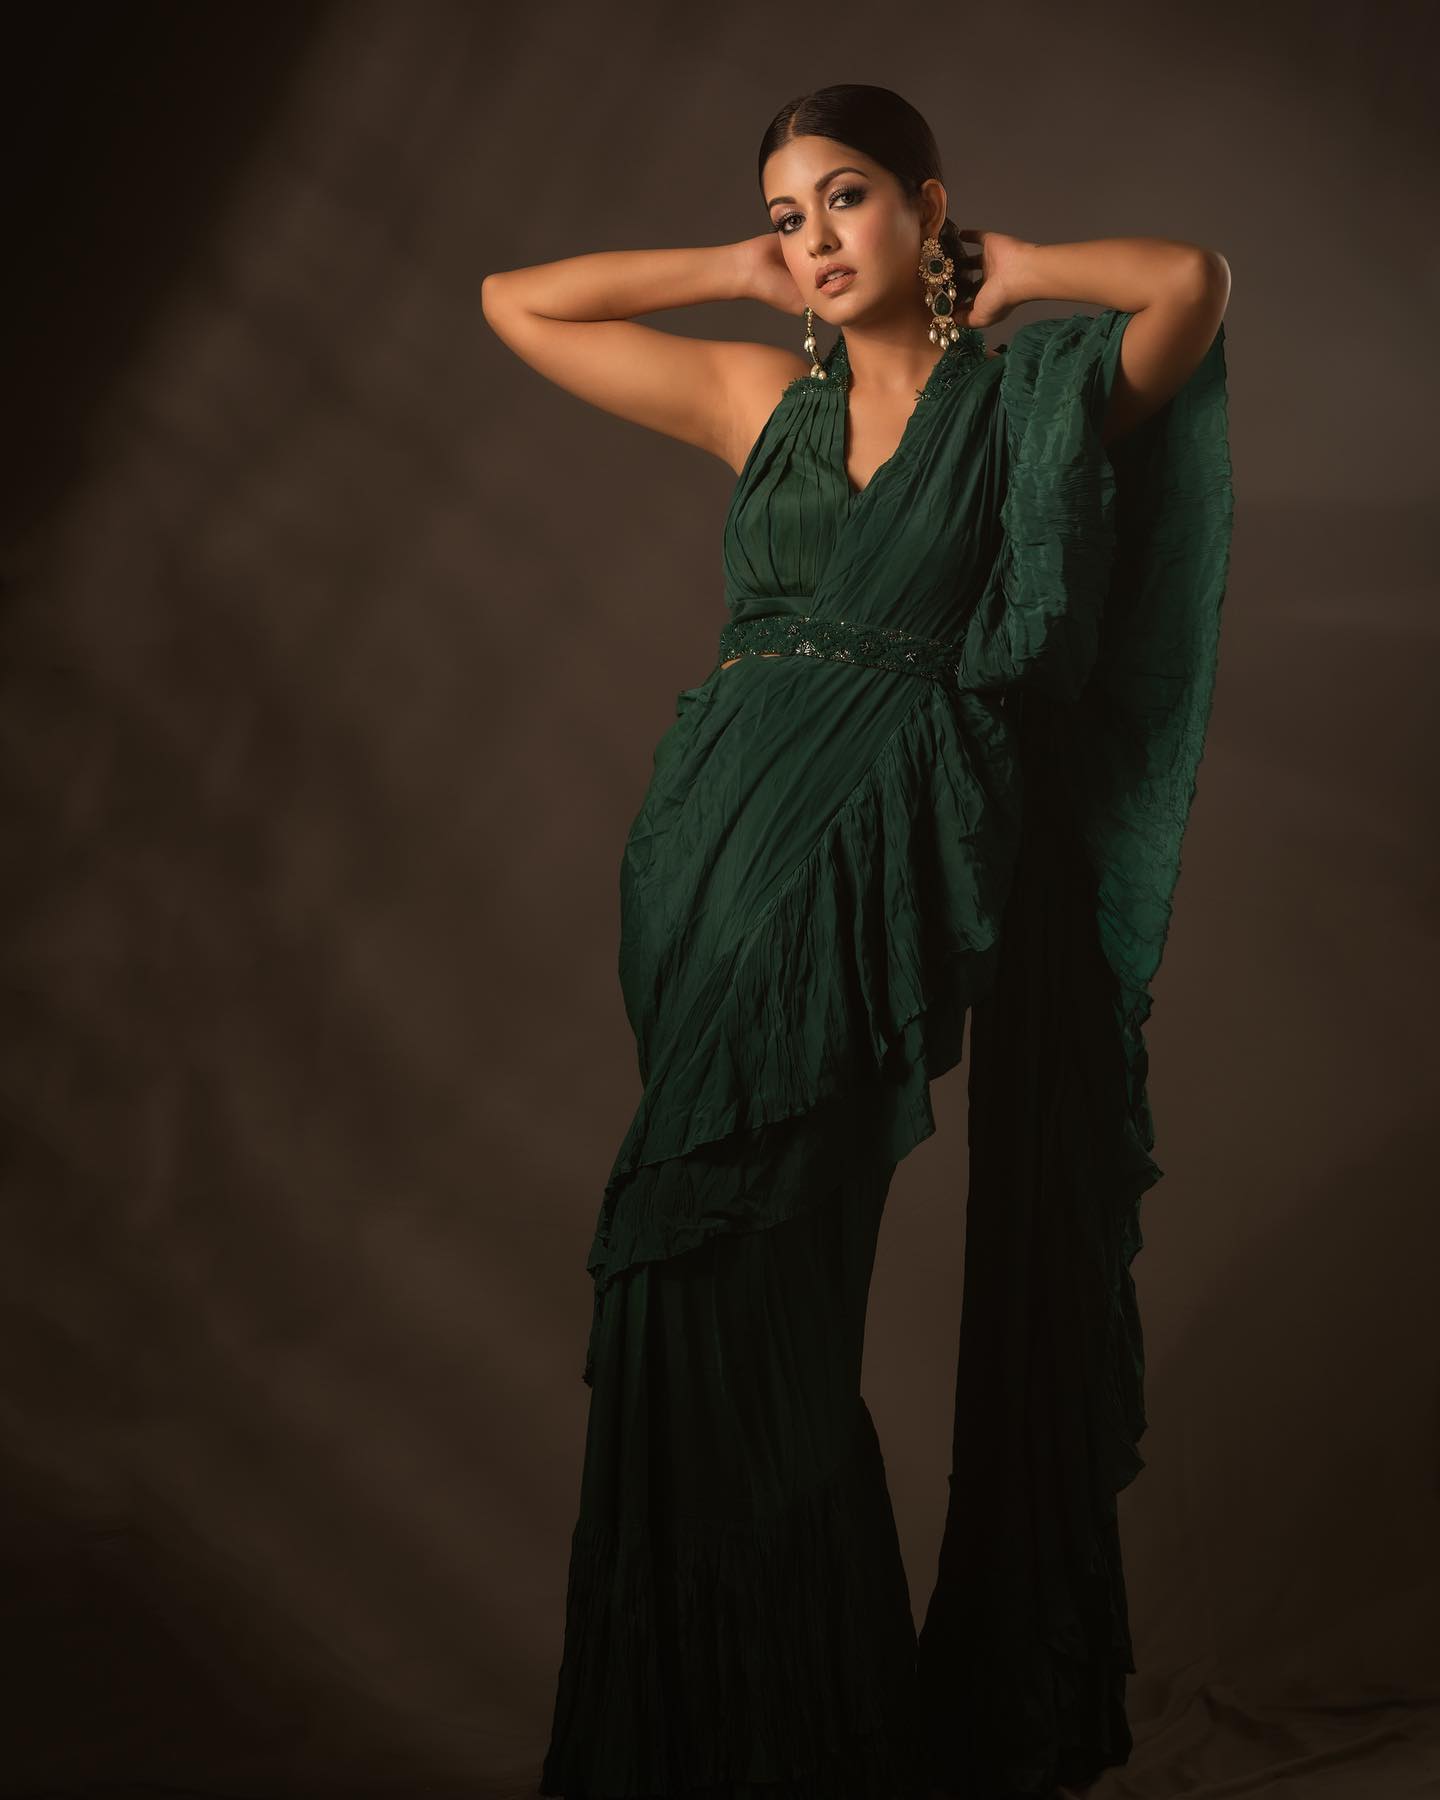 Gorgeous Actress Ishita Dutta In Green Ruffled Saree From Kali Fashion